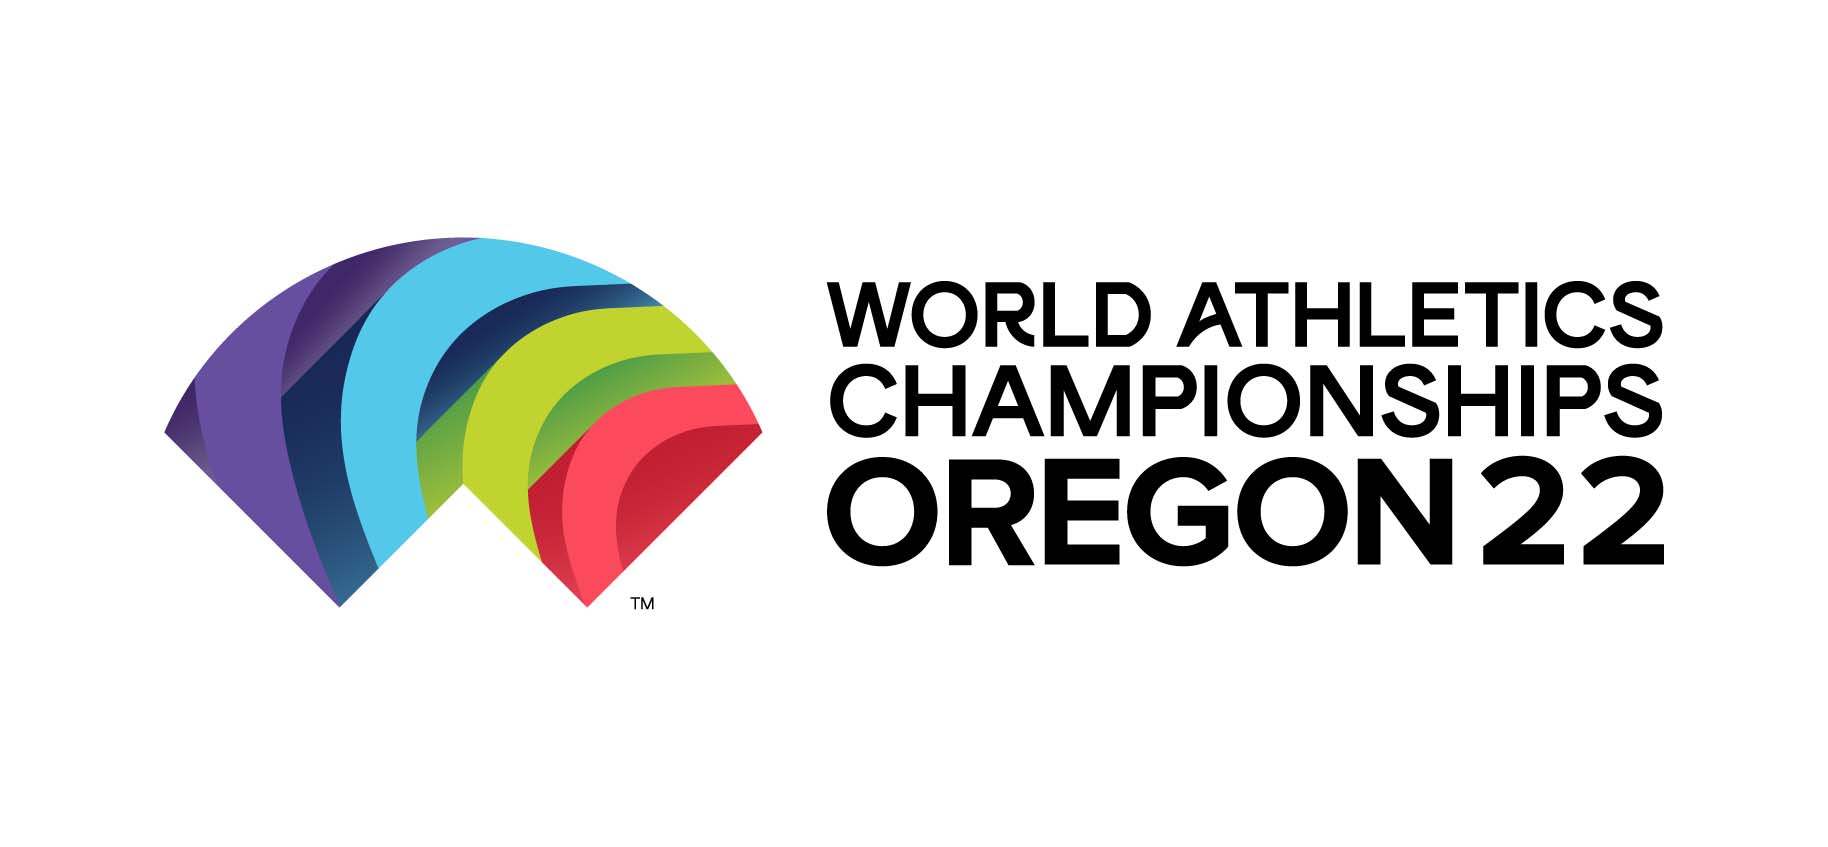 2022 WORLD ATHLETICS CHAMPIONSHIPS SET FOR OREGON, JULY 15-24